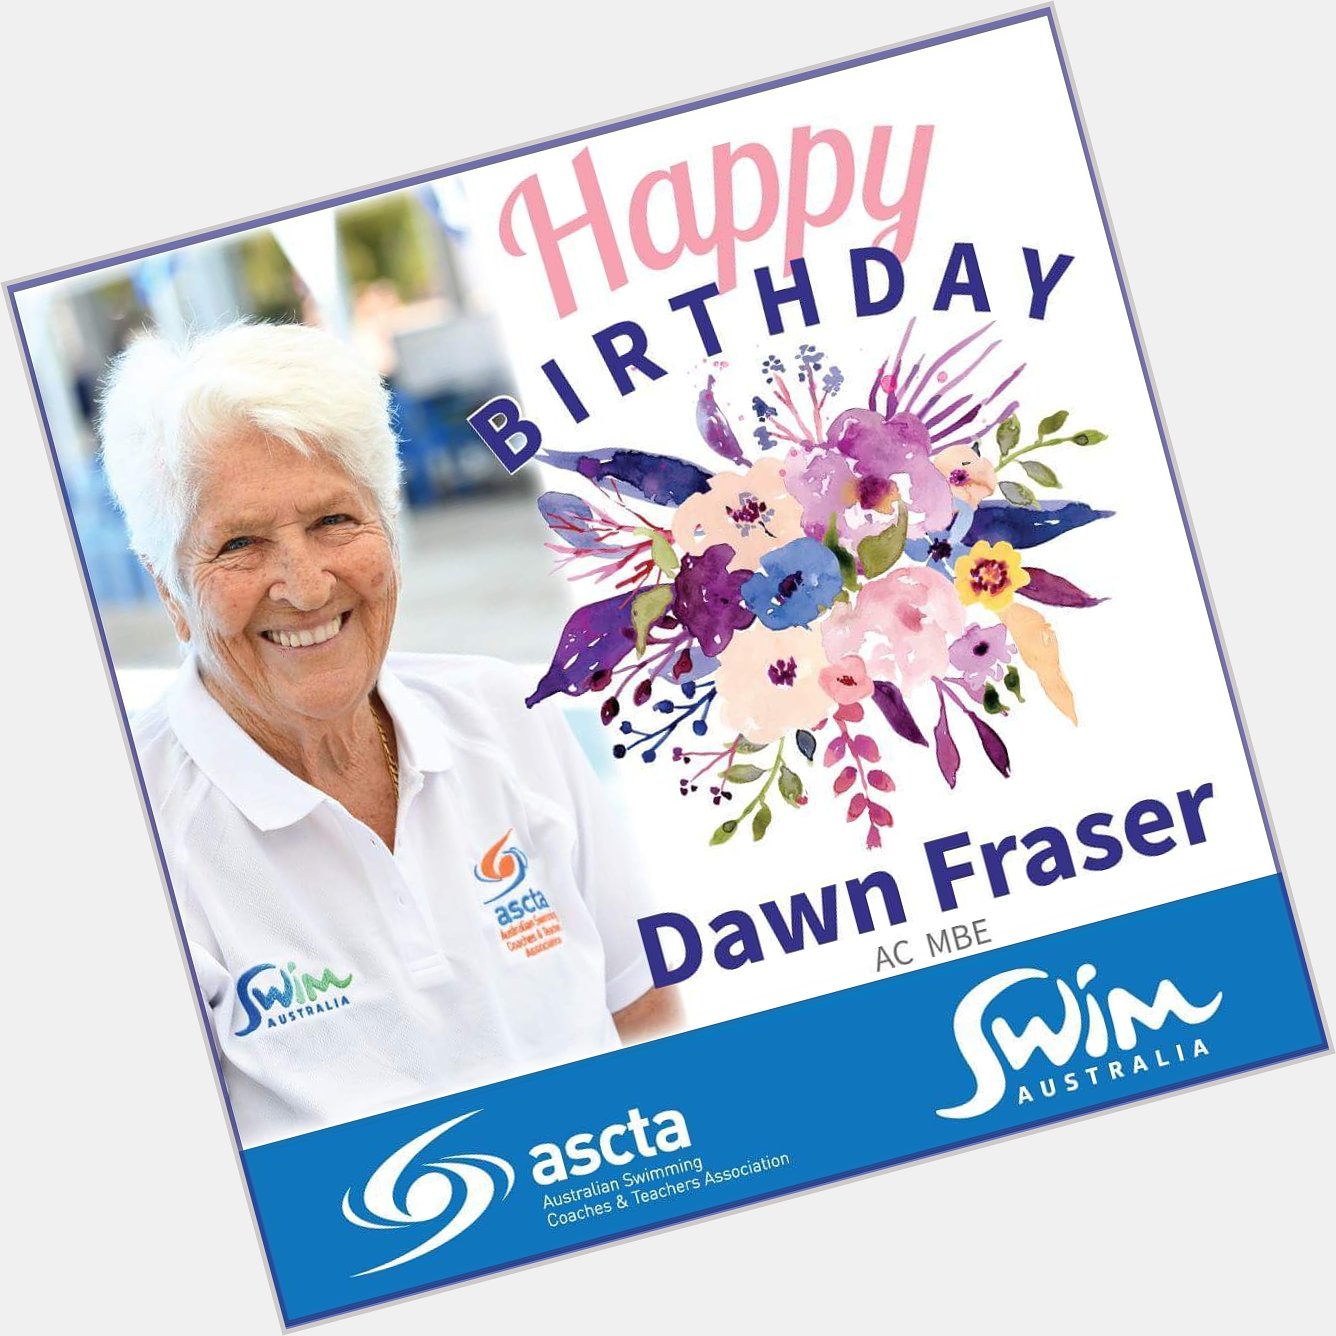 Wishing our Swim Australia Ambassador and Australian Swimming Legend Dawn Fraser Happy Birthday. 